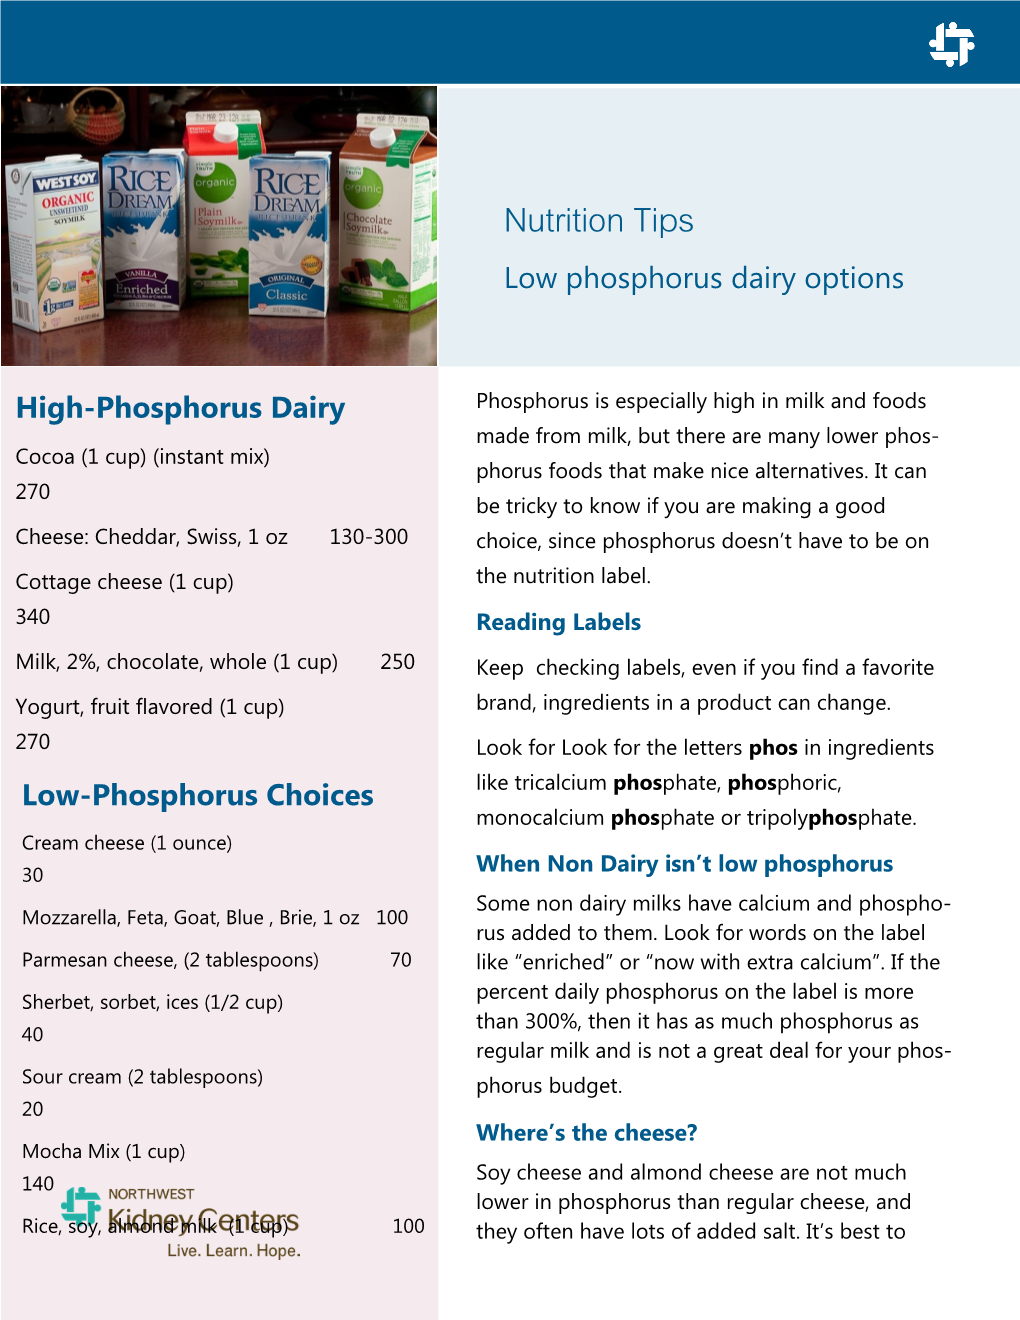 Nutrition Tips Low Phosphorus Dairy Options